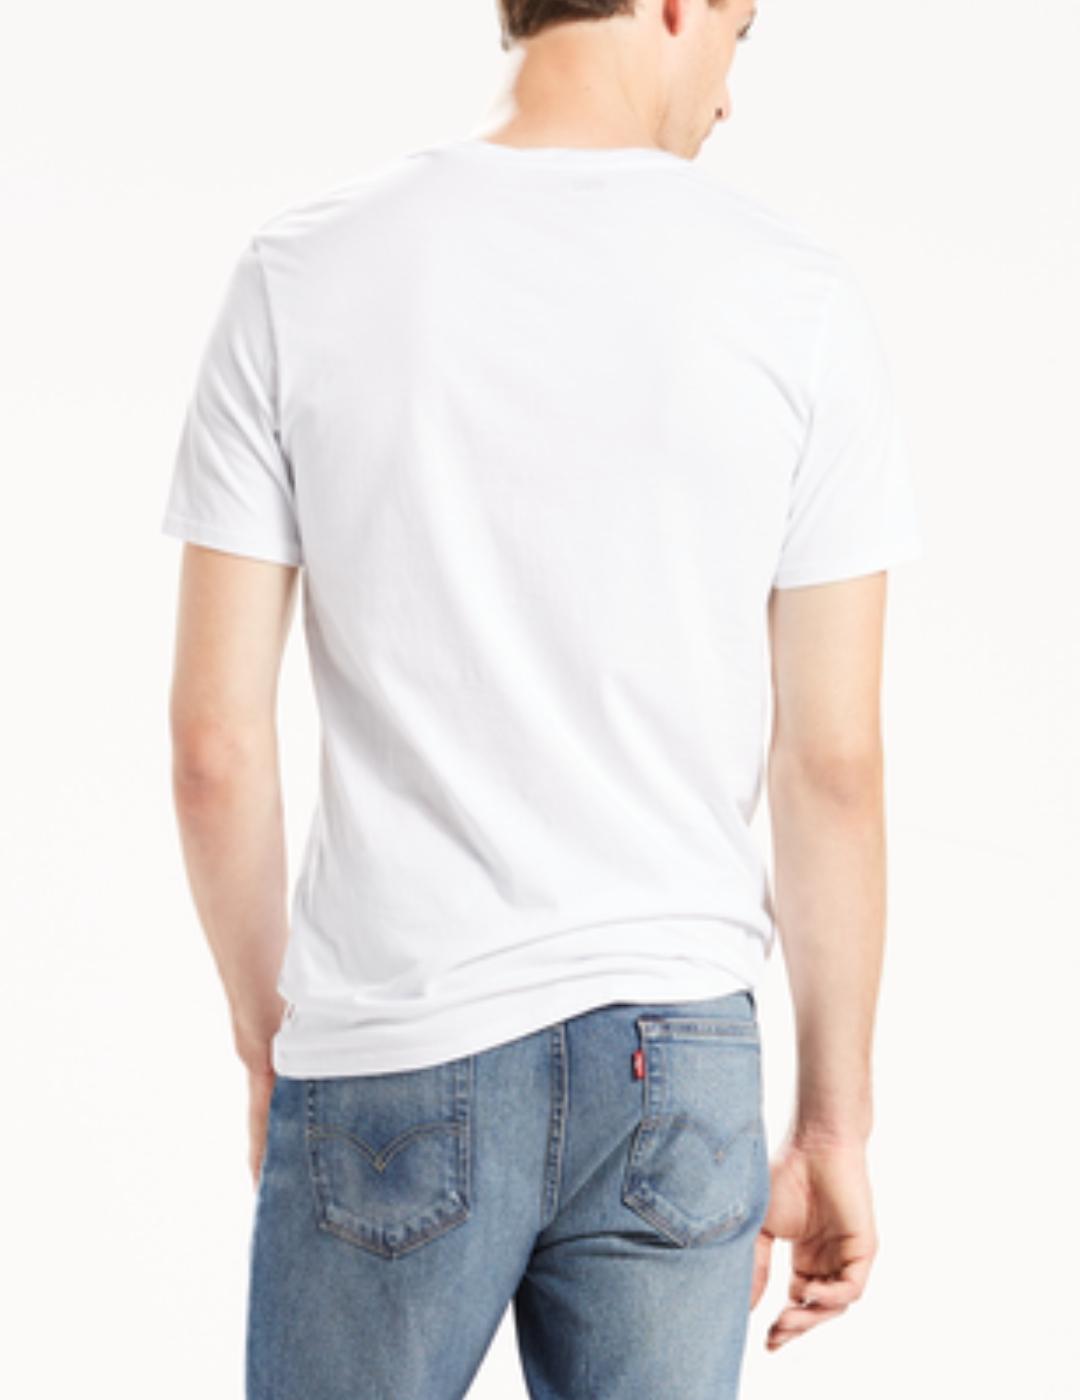 Camiseta levis logo blanco manga corta hombre-